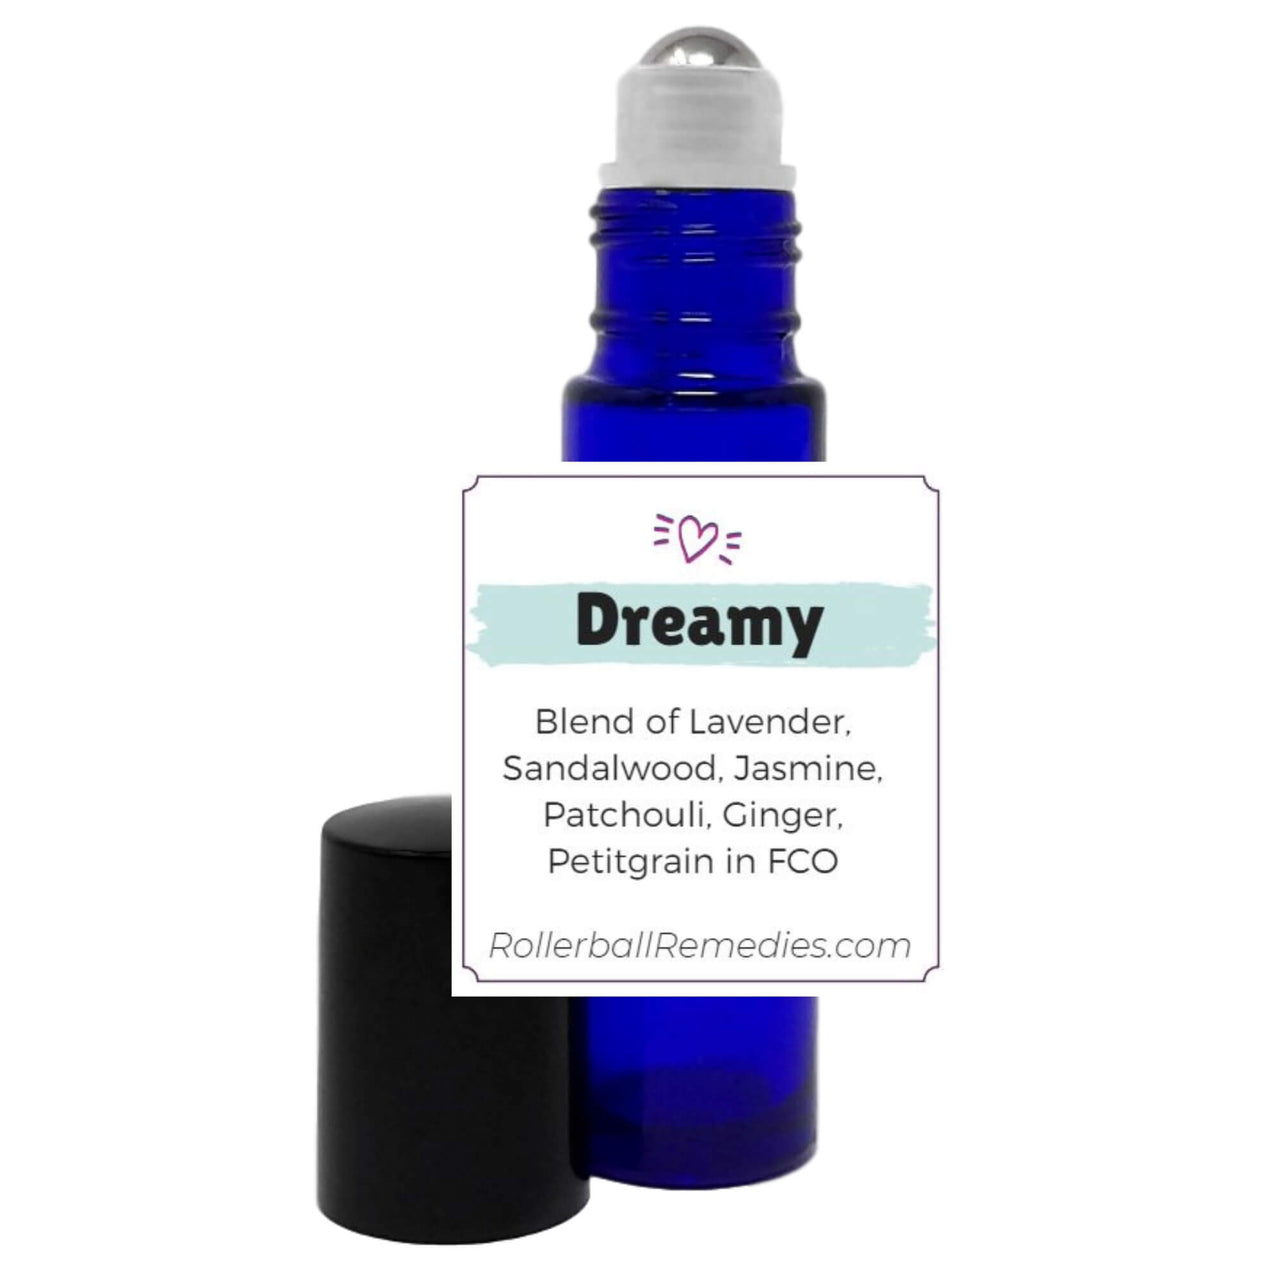 Dreamy Essential Oil Blend - 10 ml Roller Bottle with Lavender, Sandalwood, Jasmine, Patchouli, Ginger, and Petitgrain